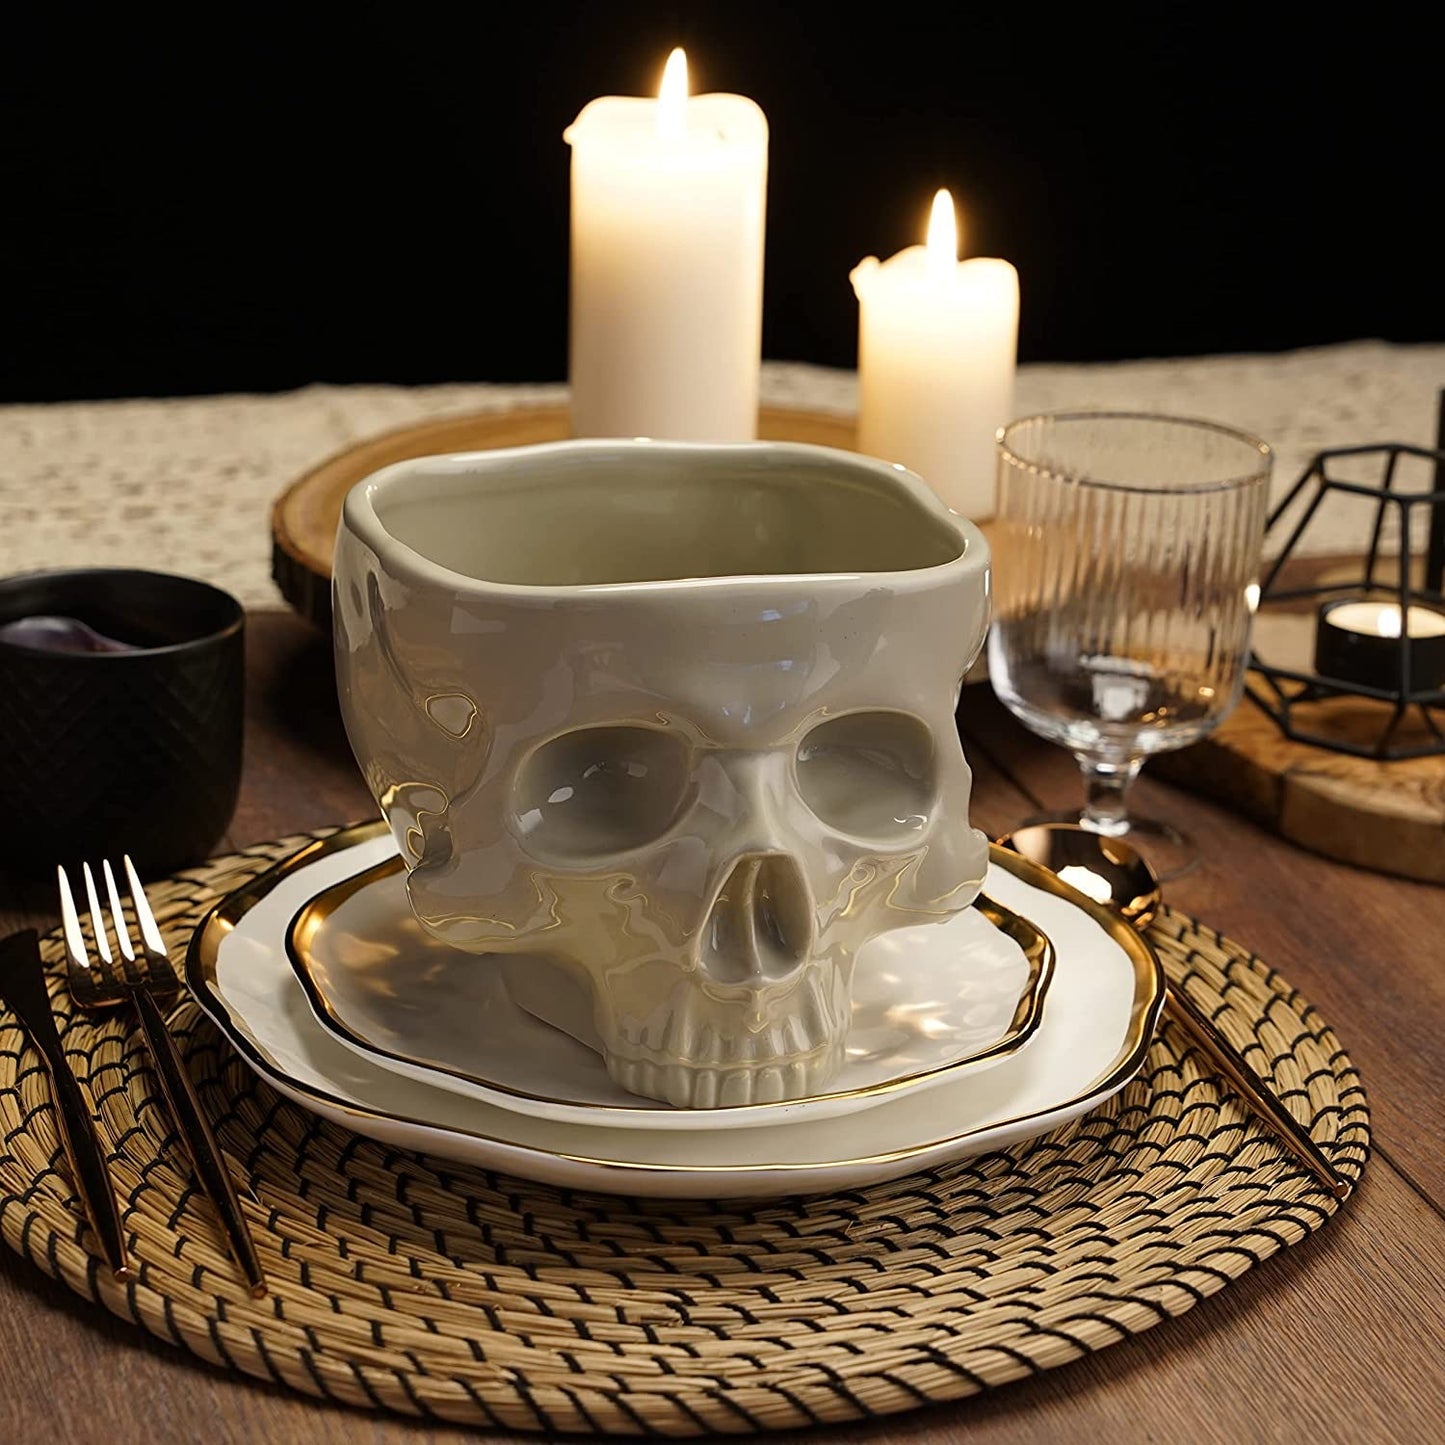 Skull Italian Noodle Bowl Halloween Tableware Table Decoration